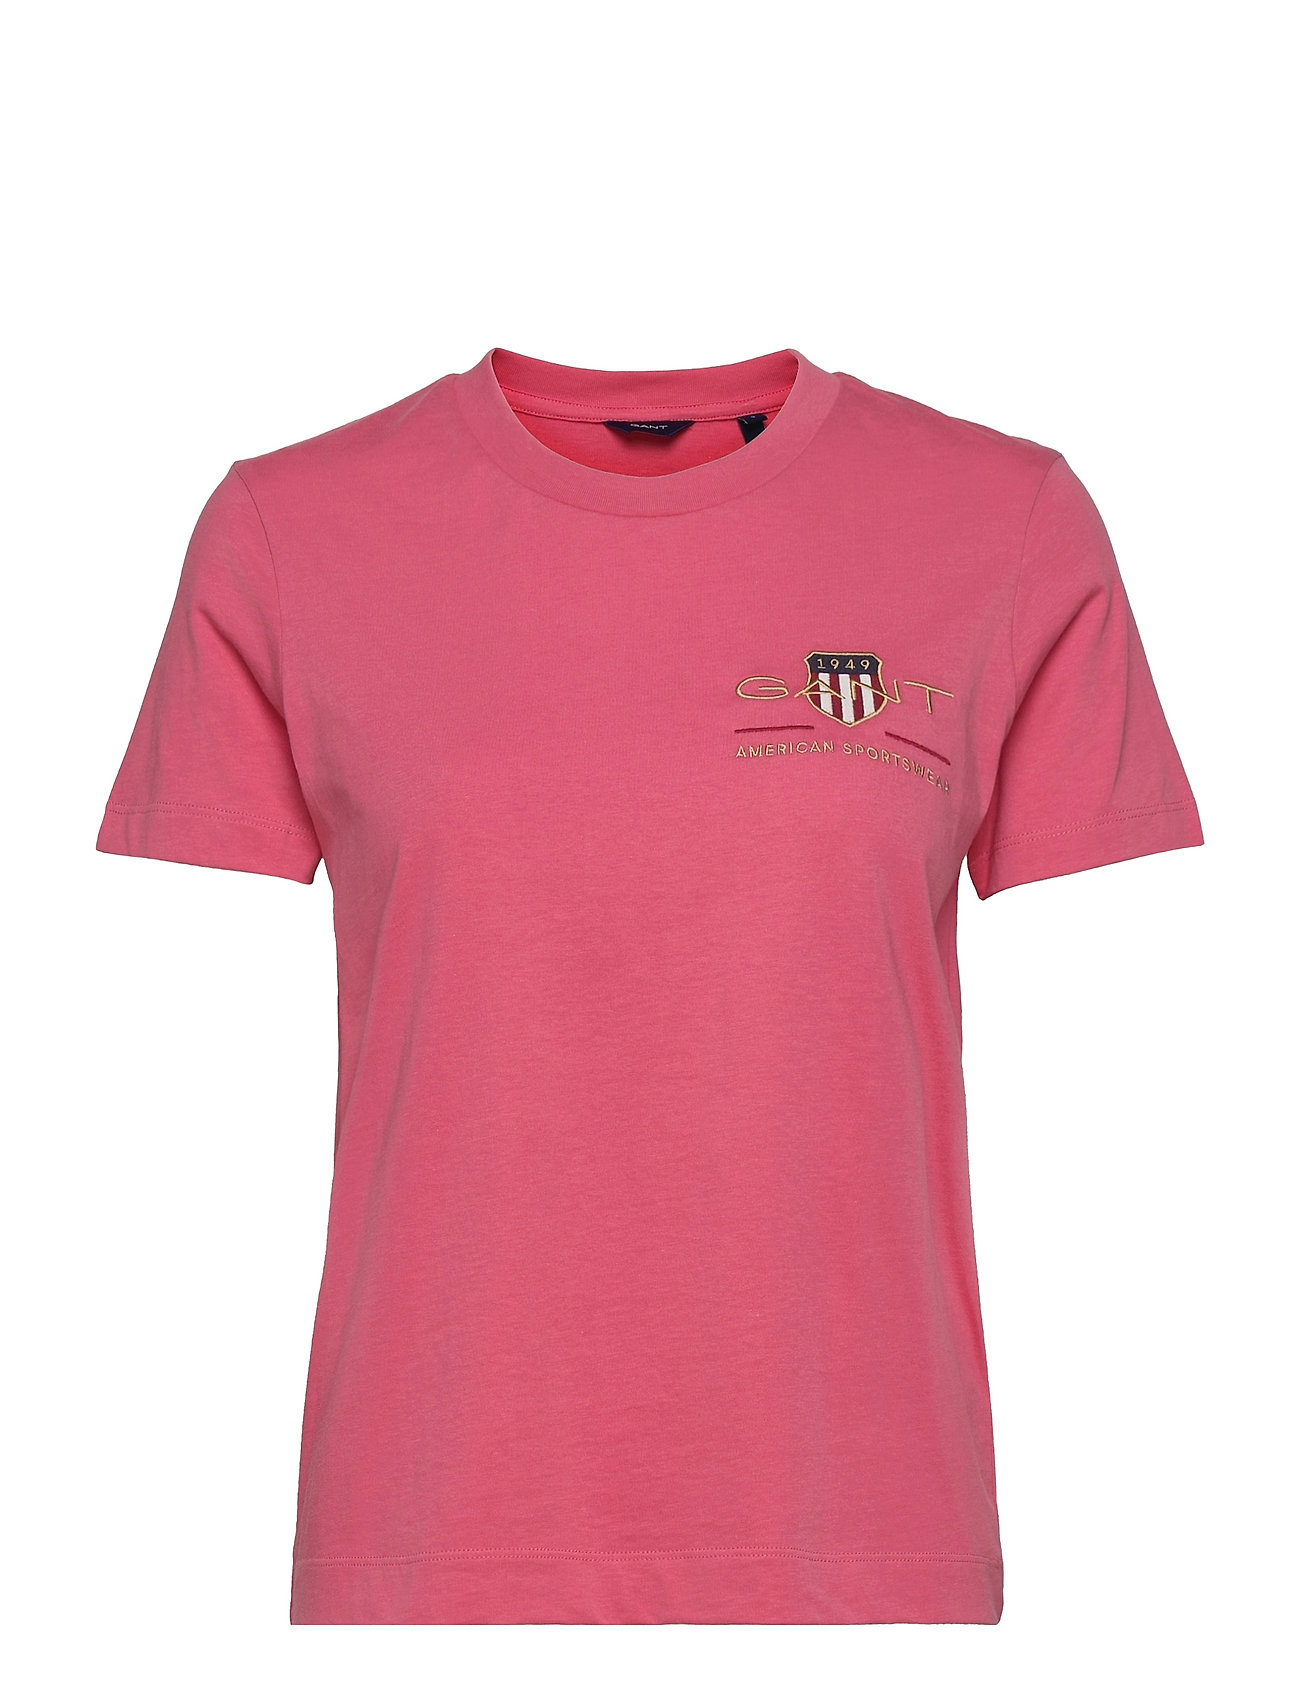 Archive Shield Ss T-Shirt T-shirts & Tops Short-sleeved Vaaleanpunainen GANT